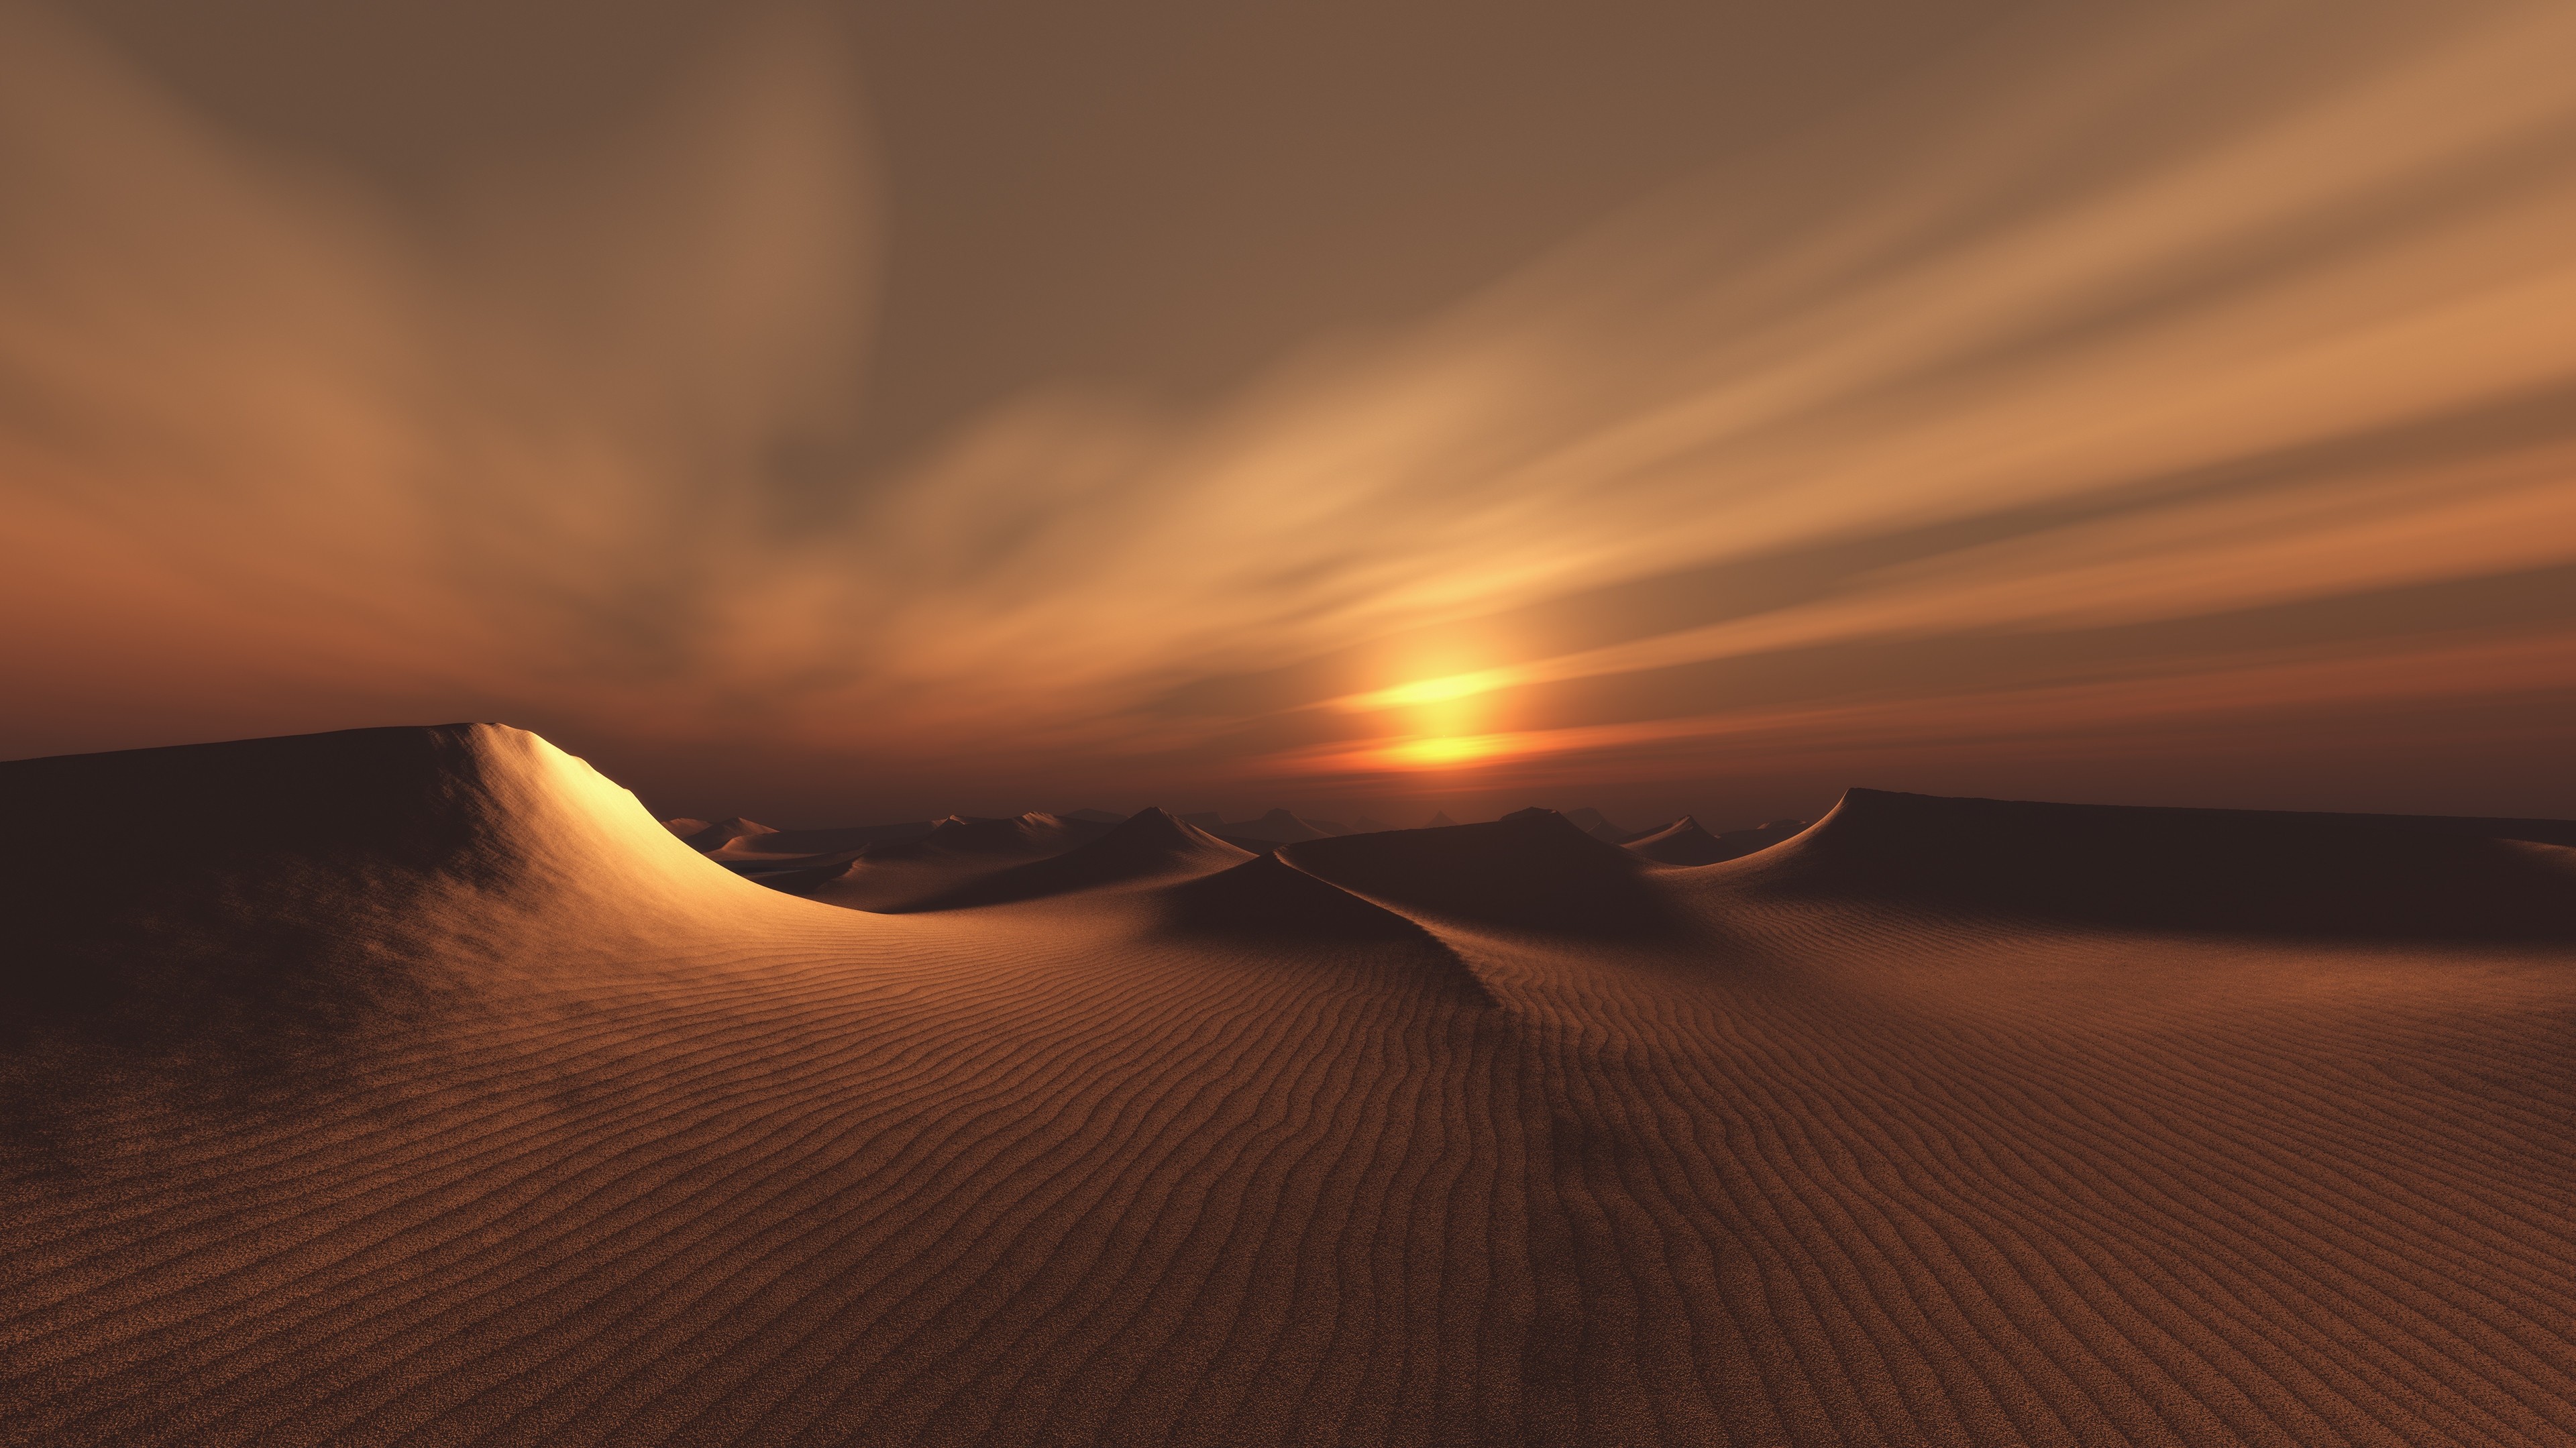 General 3840x2159 desert digital art CGI landscape nature sky sunlight dunes